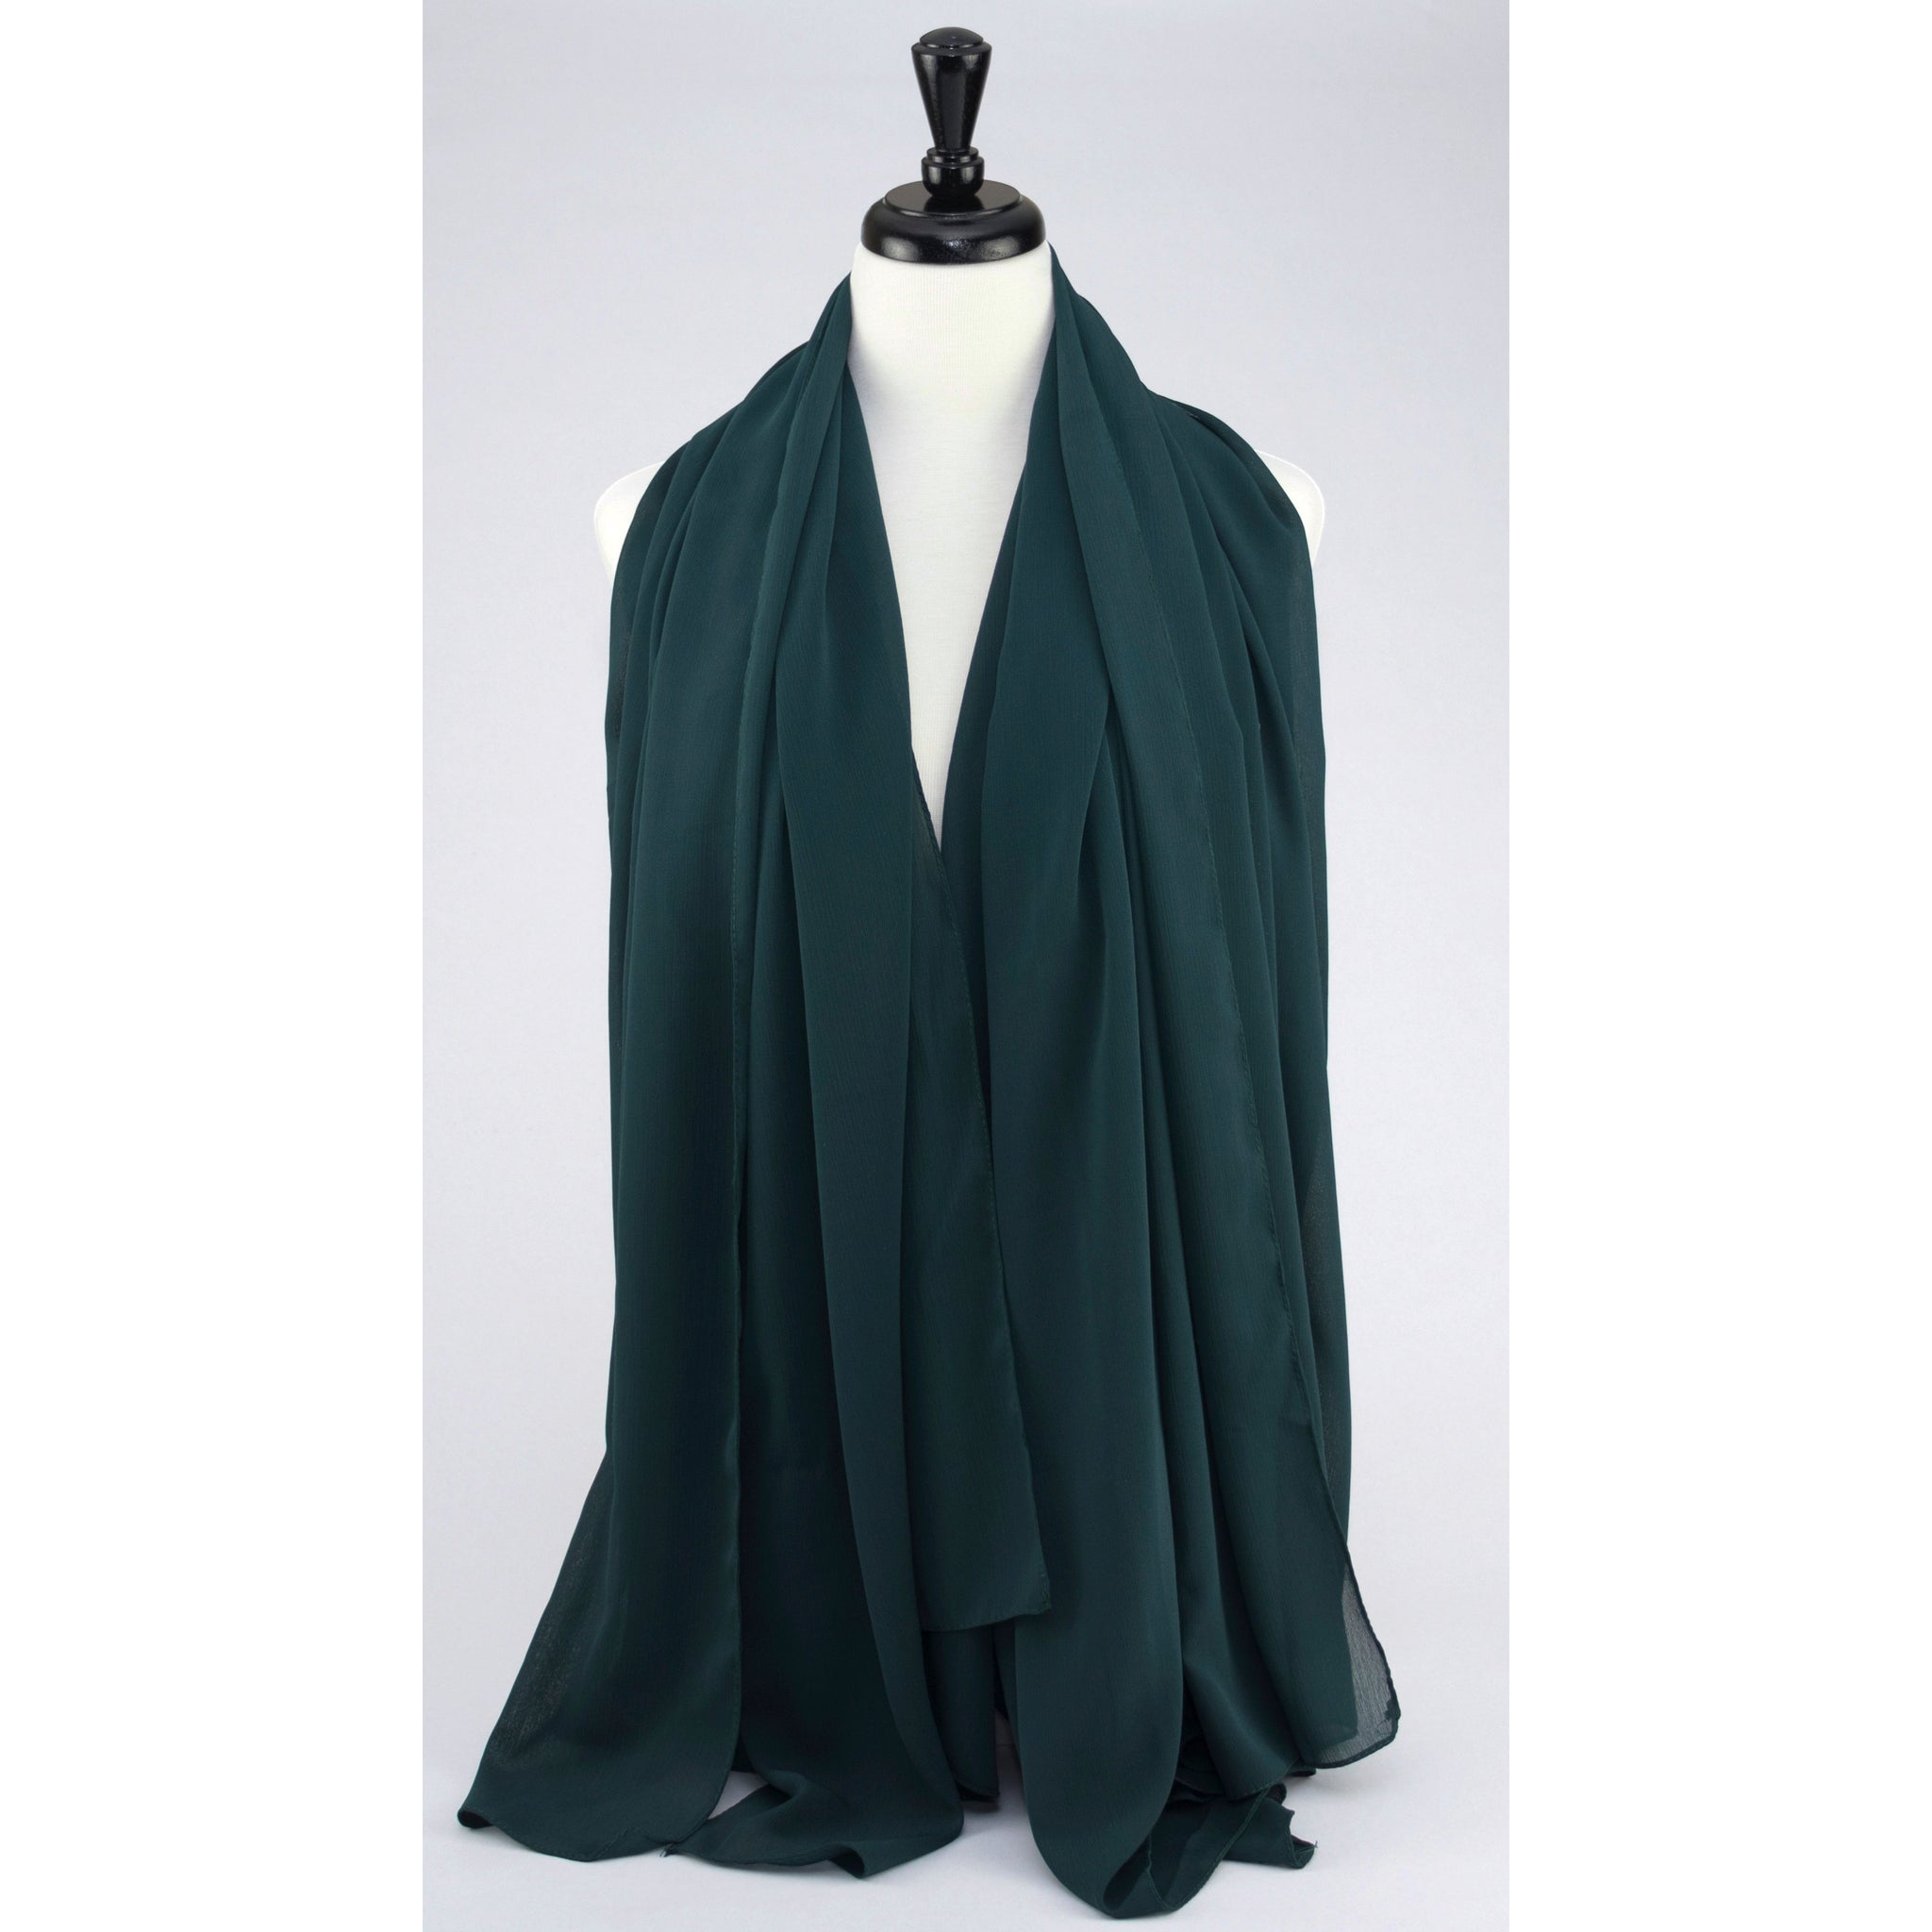 Textured Chiffon Emerald Green Hijab Scarf – Modestia Collection